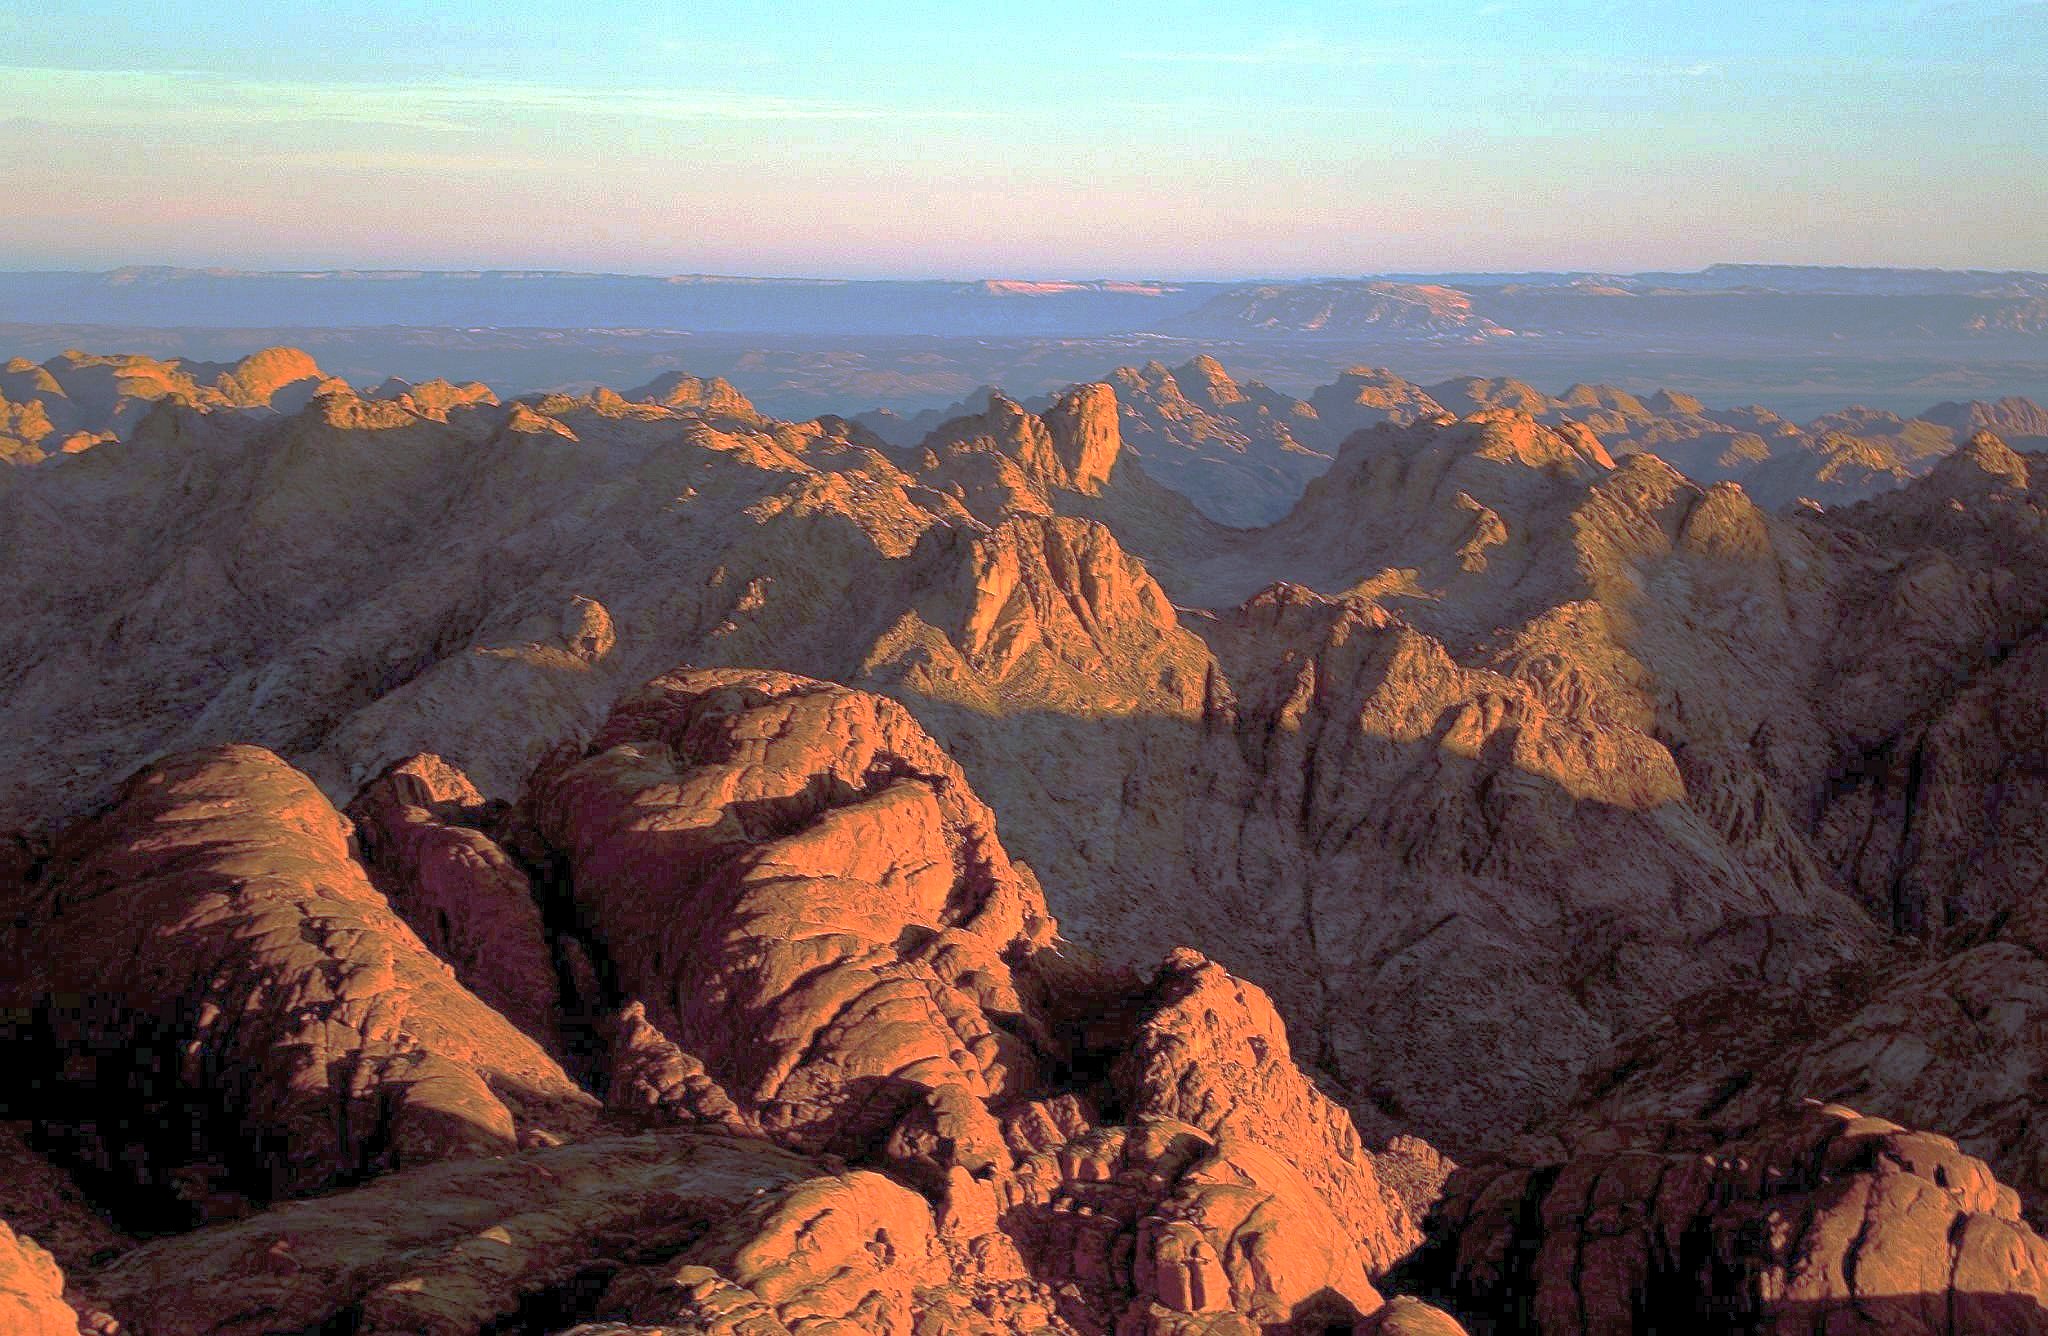 Sinai peninsula